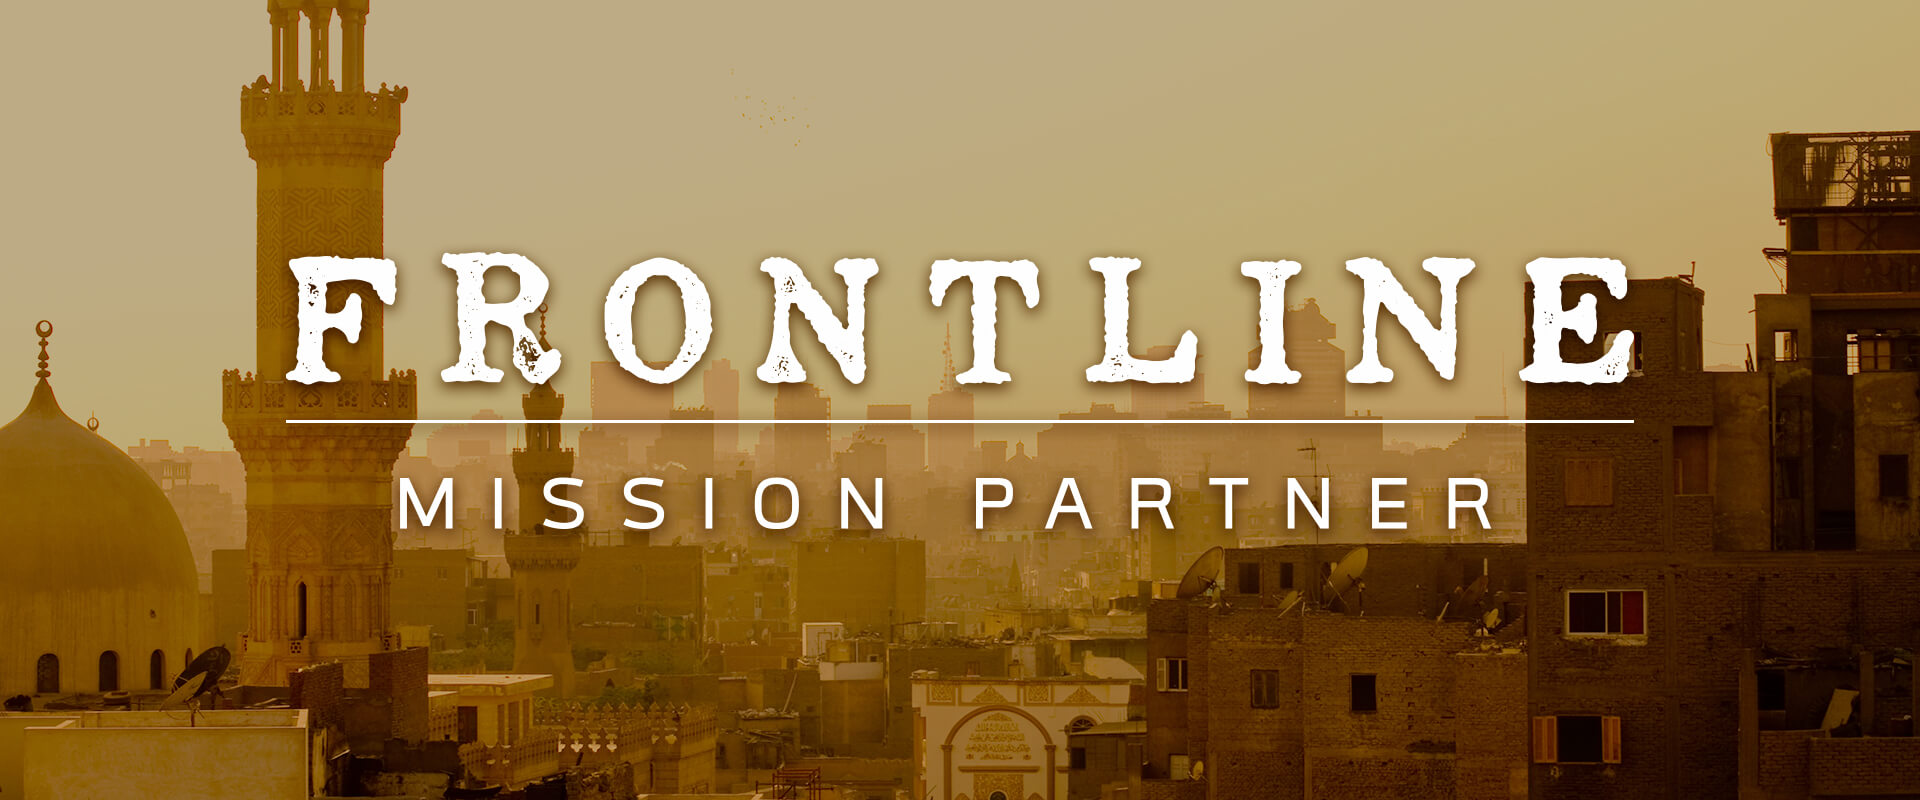 Frontline Mission Partners